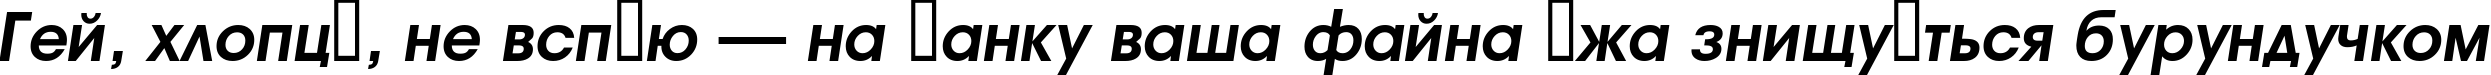 Пример написания шрифтом a_AvanteInt BoldItalic текста на украинском